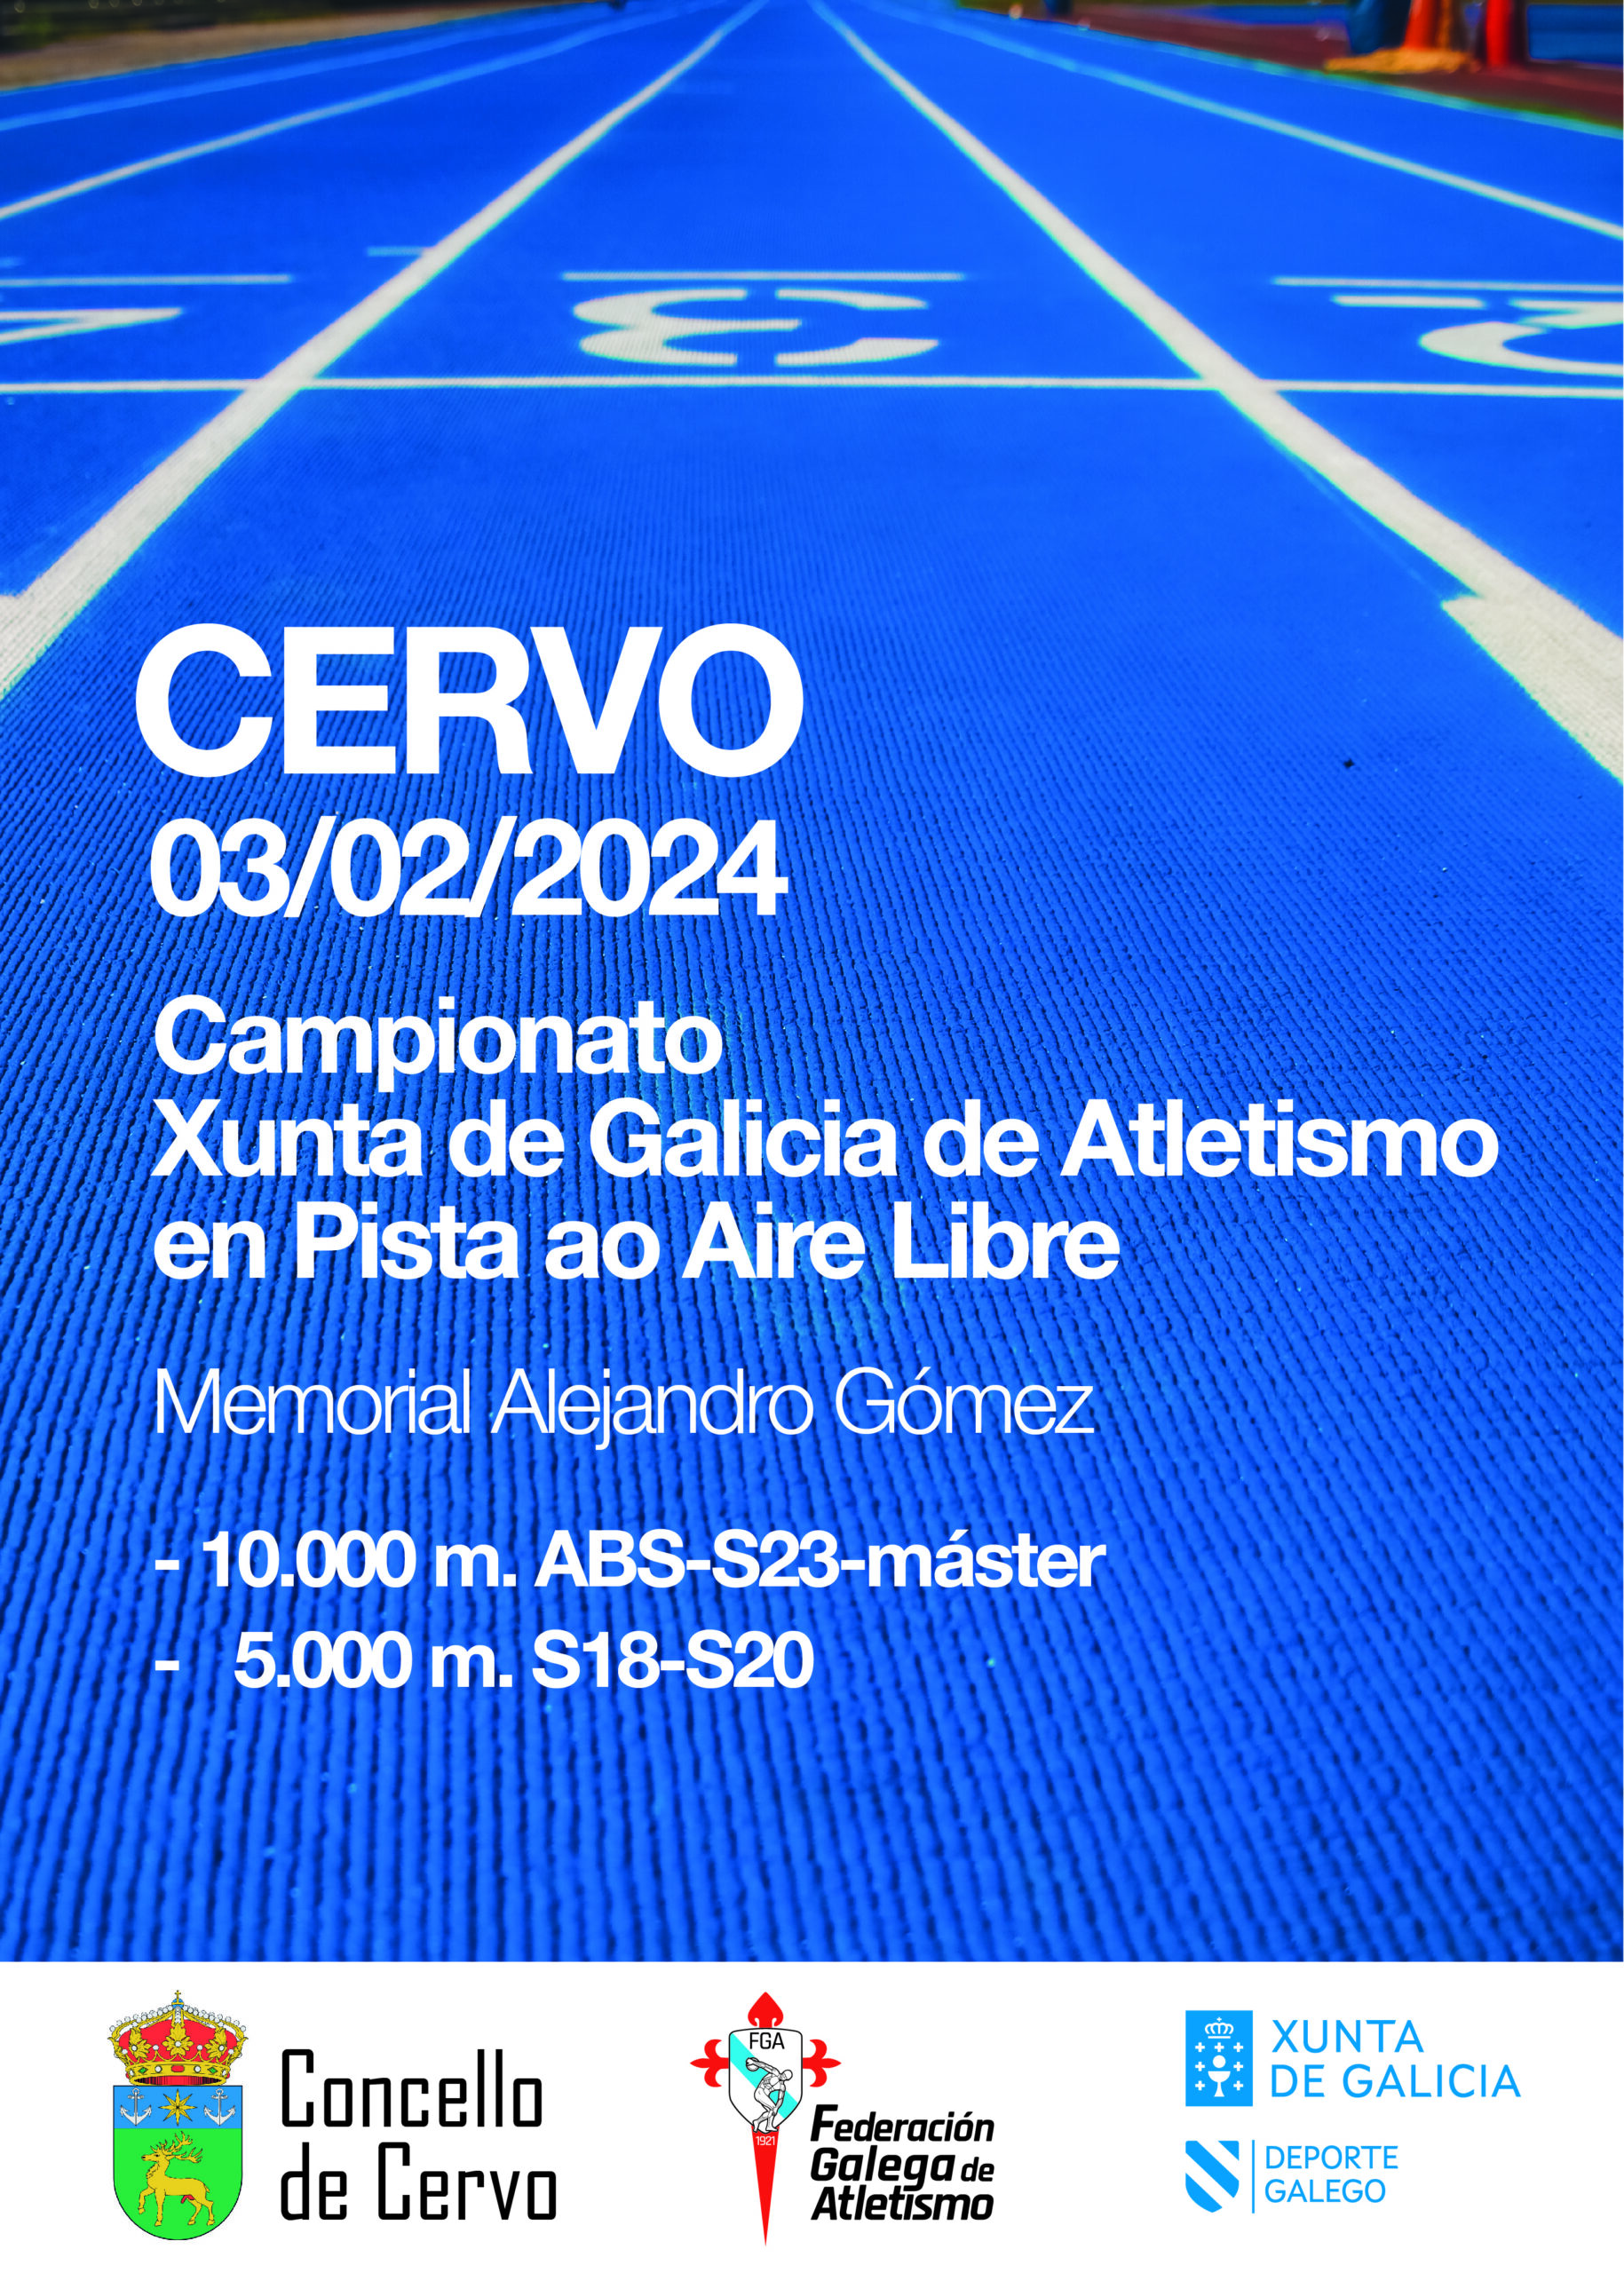 Campionato Xunta de Galicia de 10.000 m. Abs, Sub 23 e Master e 5000 Sub18 e Sub 20. Memorial Alejandro Gómez